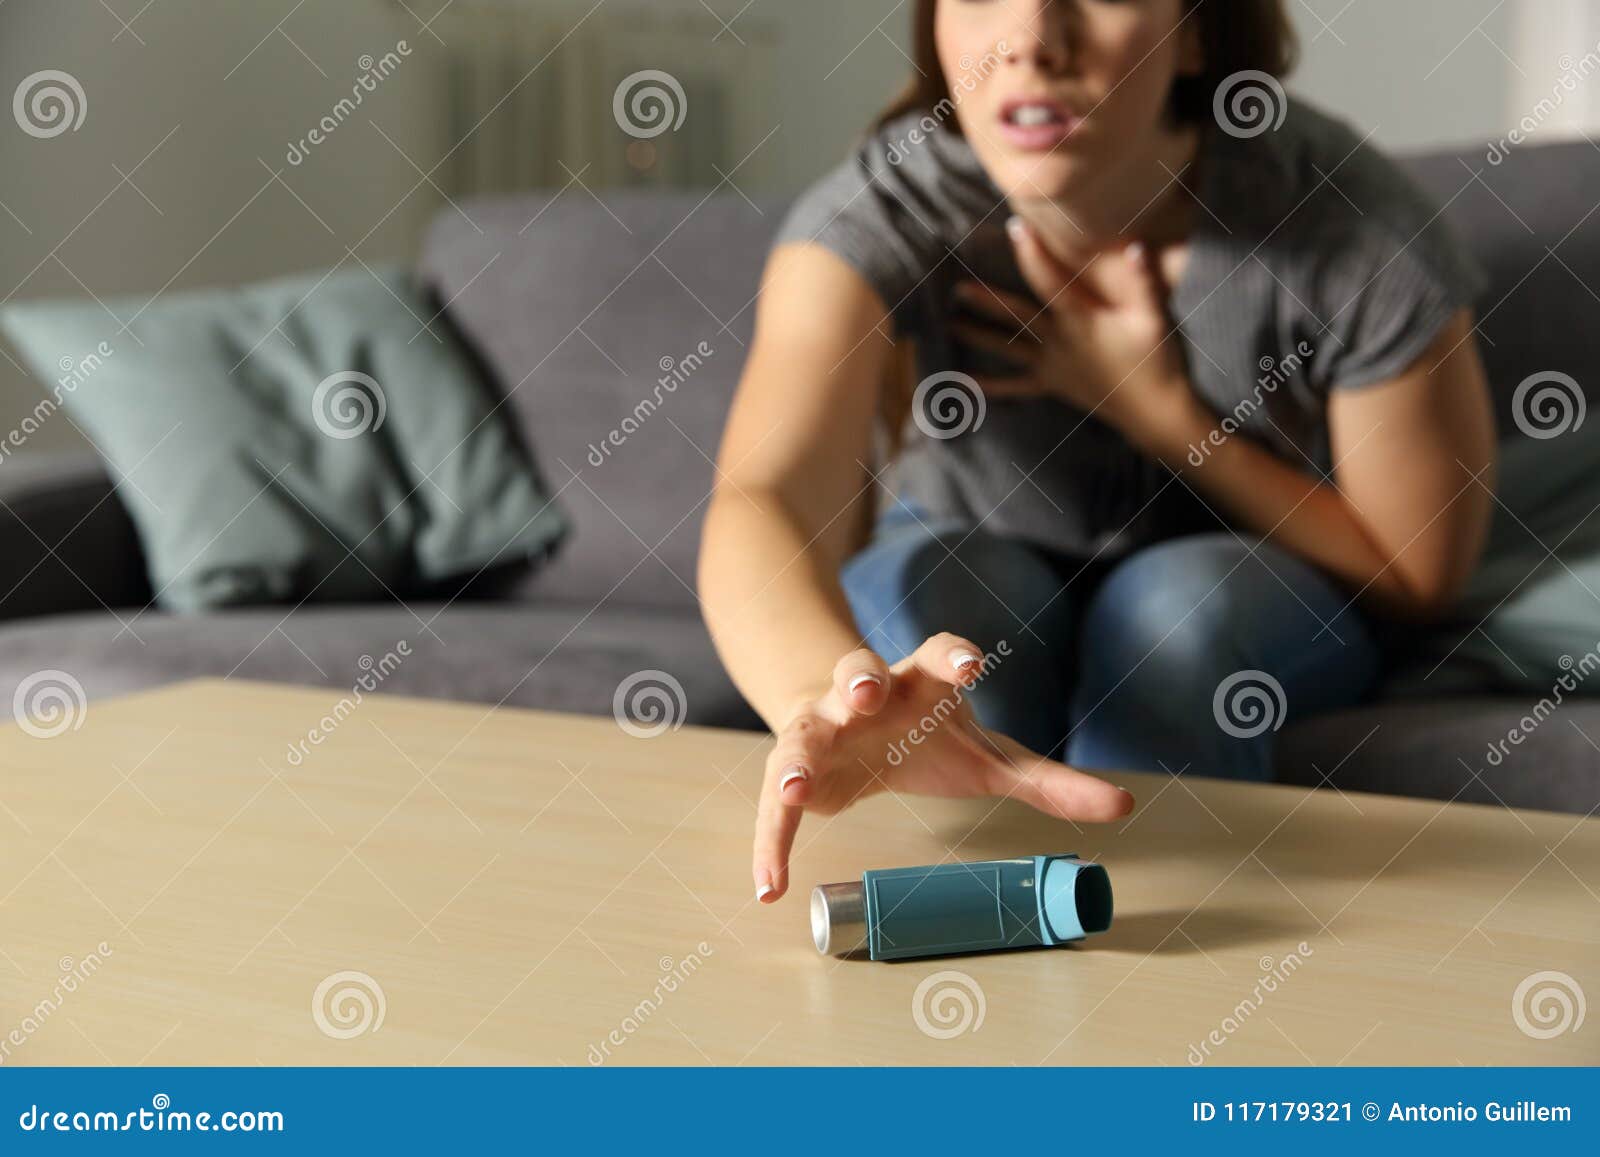 asmathic girl catching inhaler having an asthma attack